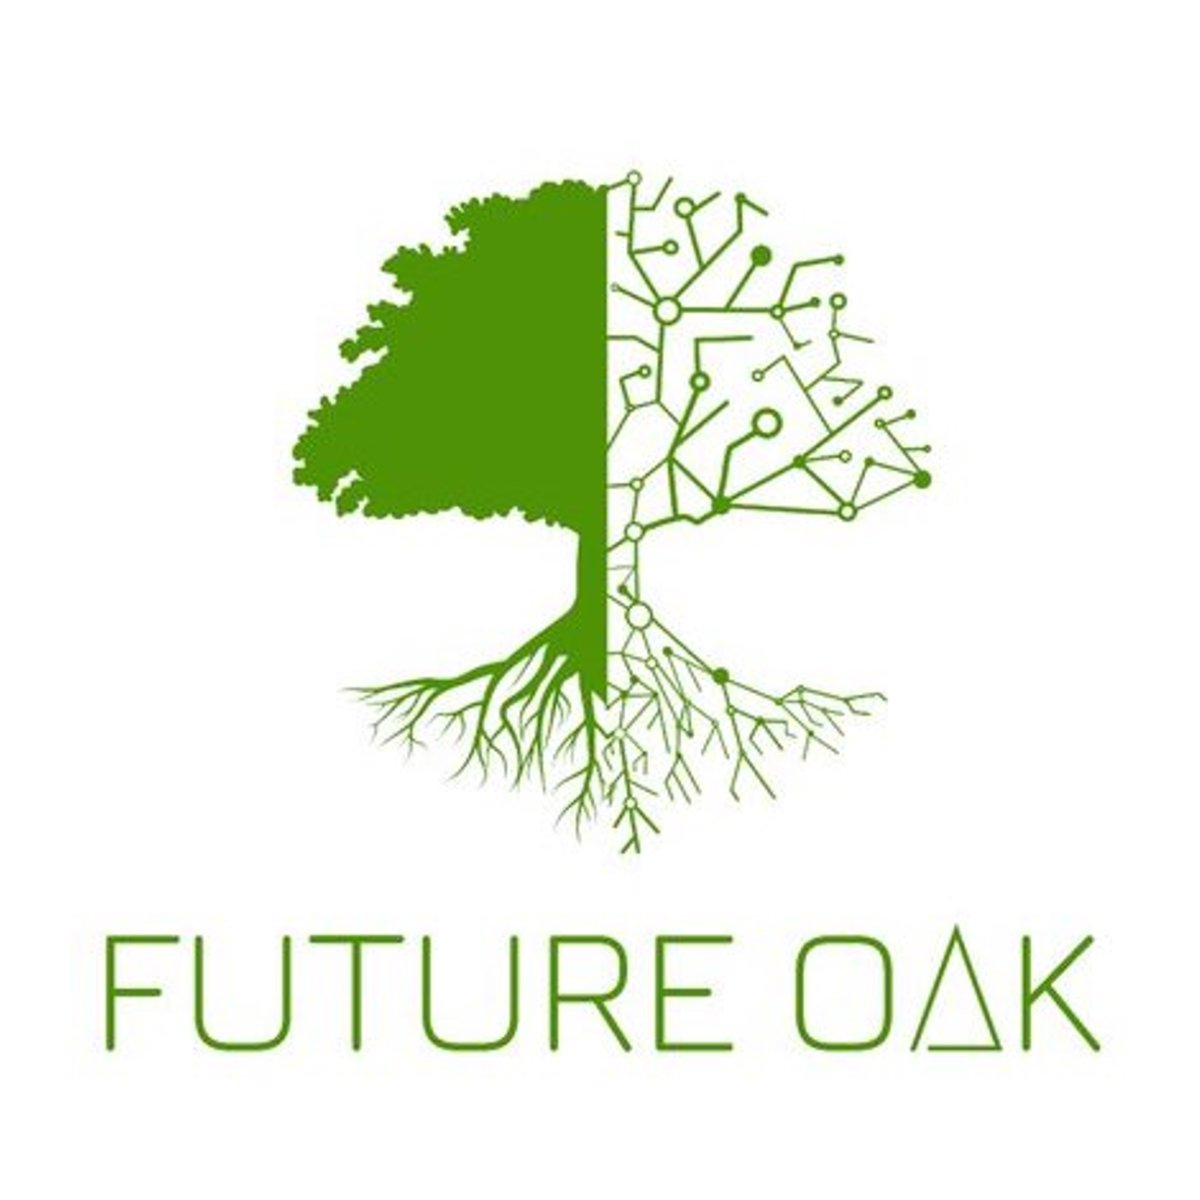 Future Oak_1.jpg